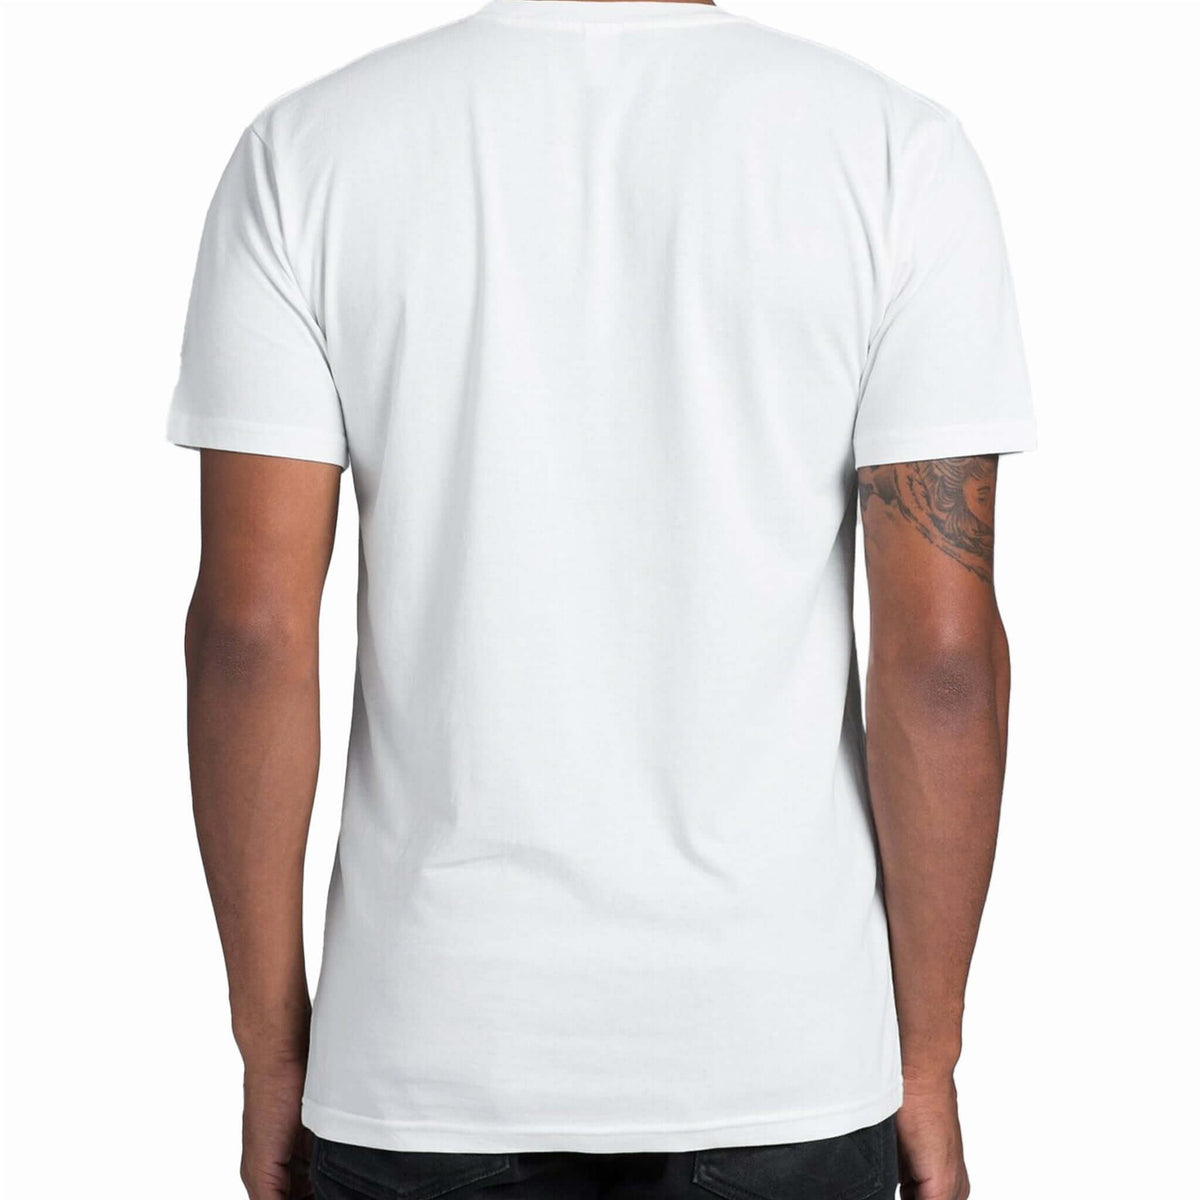 back view of man wearing white v neck t shirt